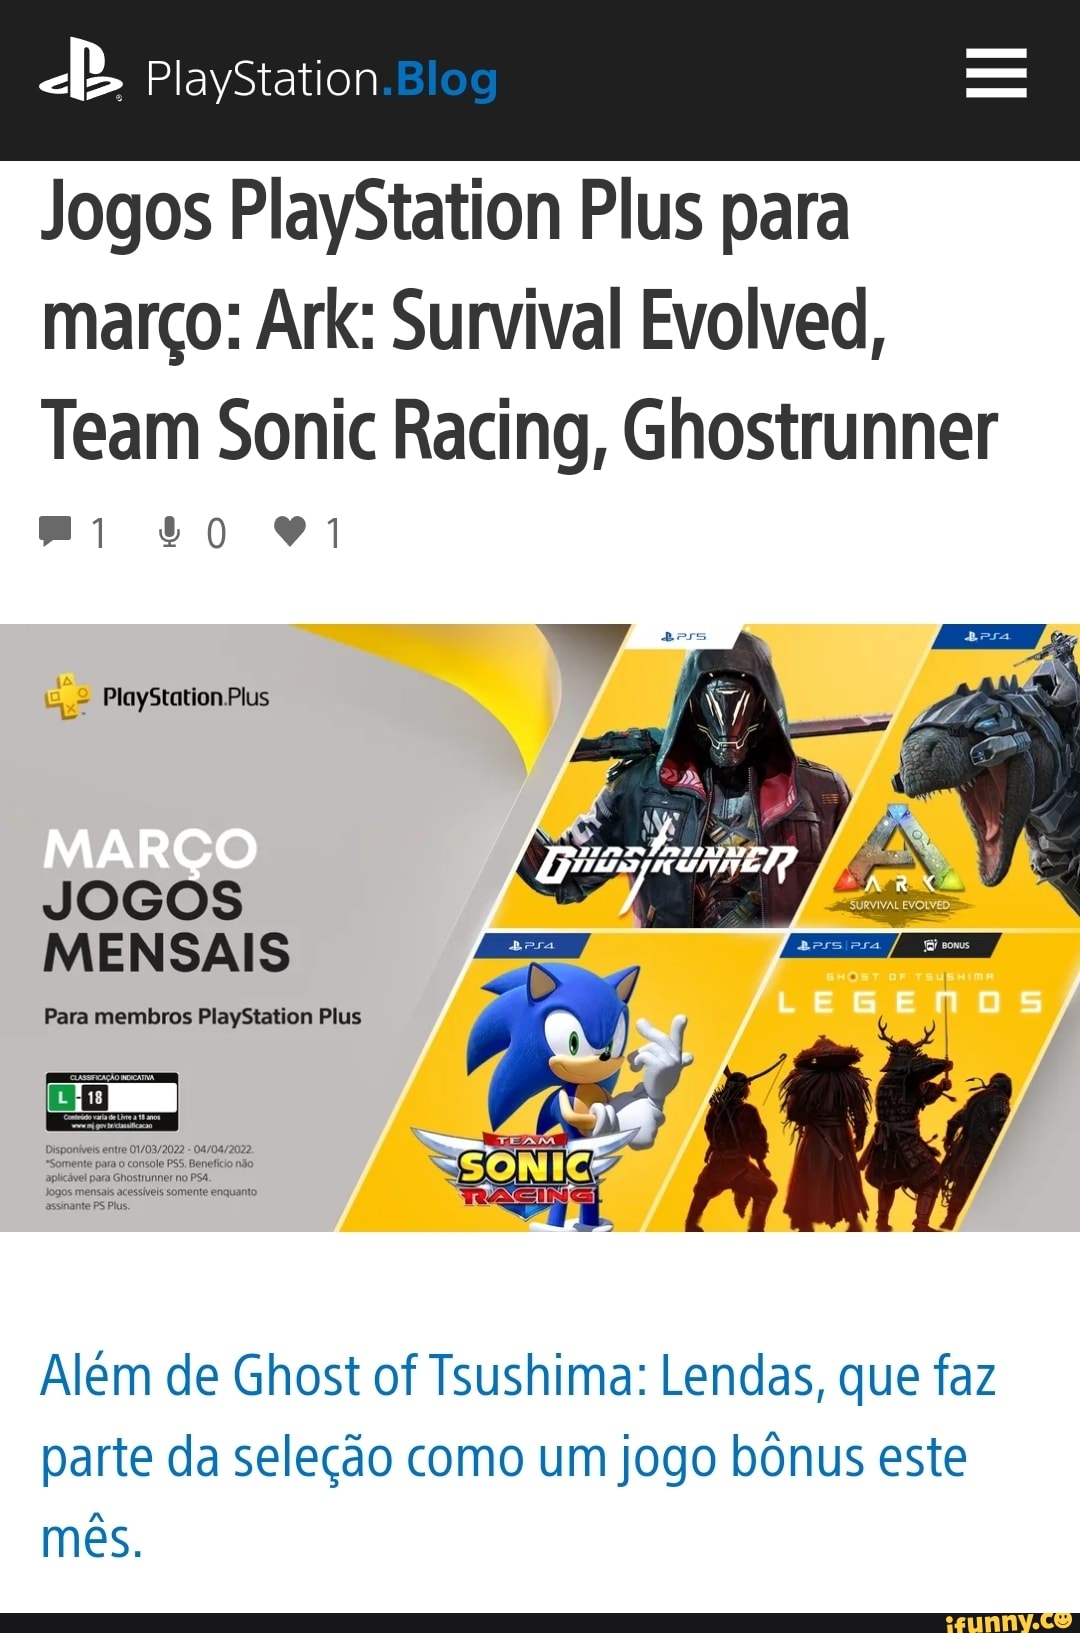 PS Plus: Ark: Survival Evolved, Team Sonic Racing, Ghostrunner são